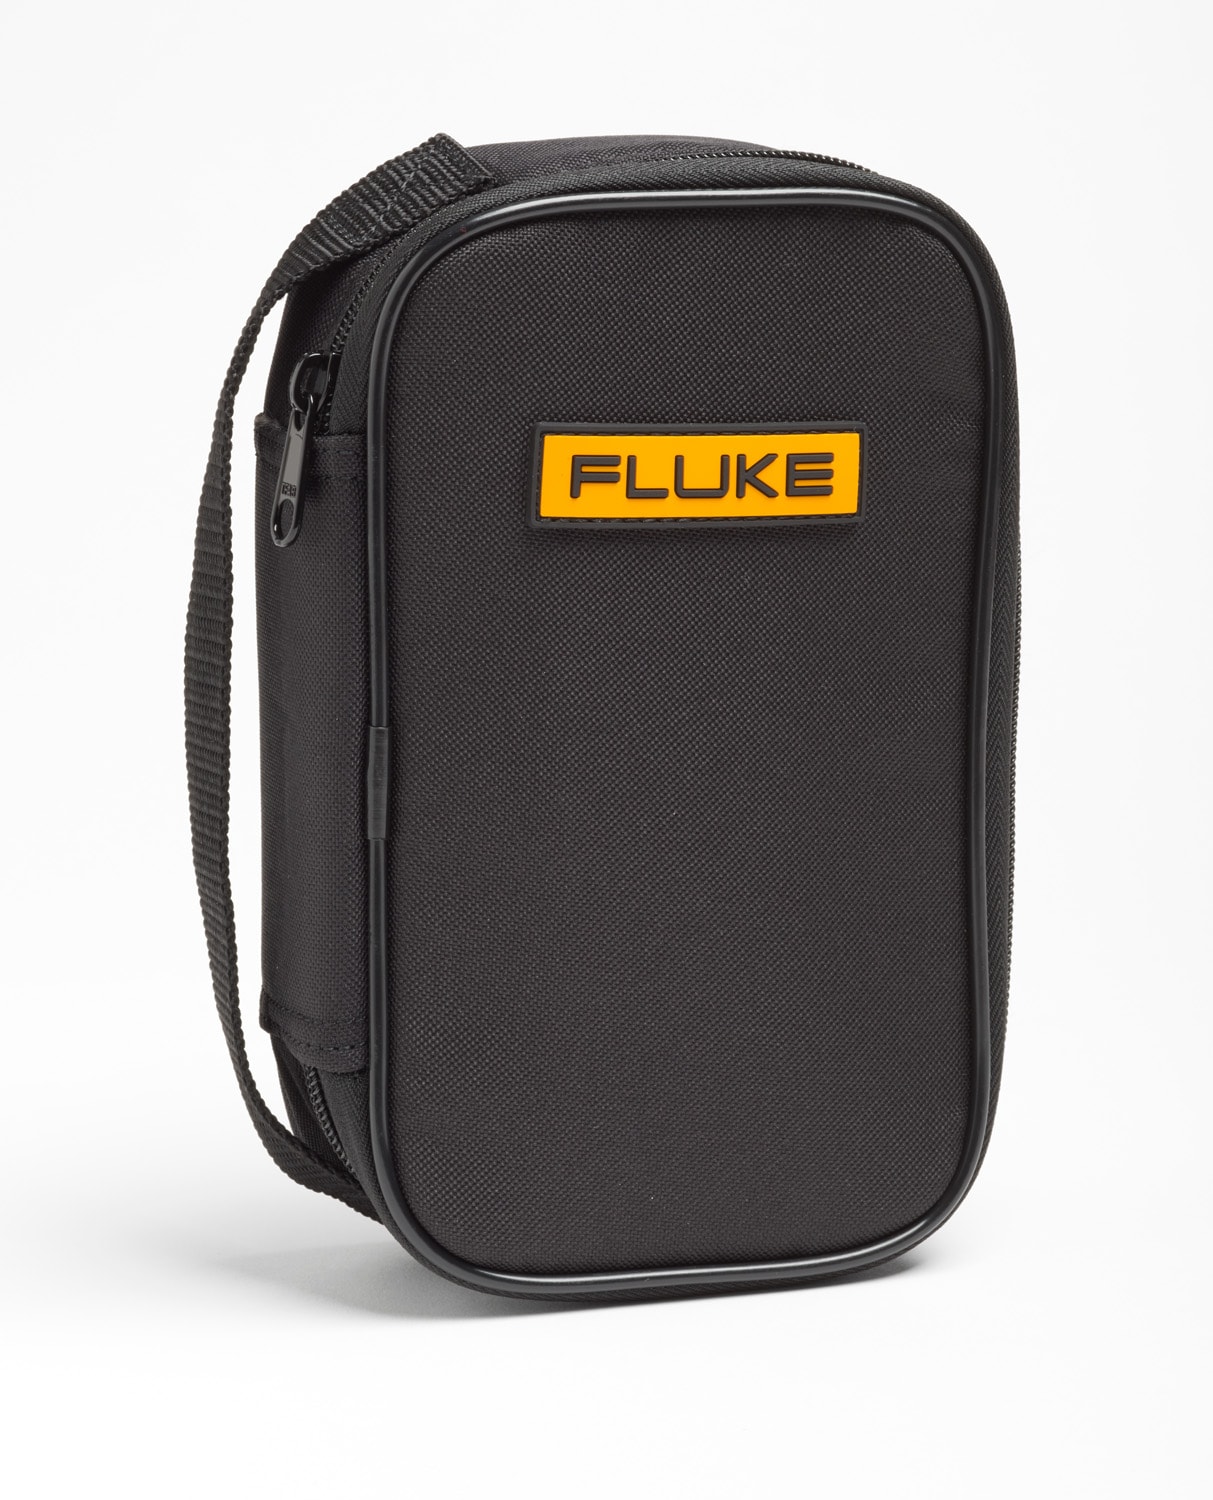 Fluke C115 Polyester Soft Carrying Case for sale online 